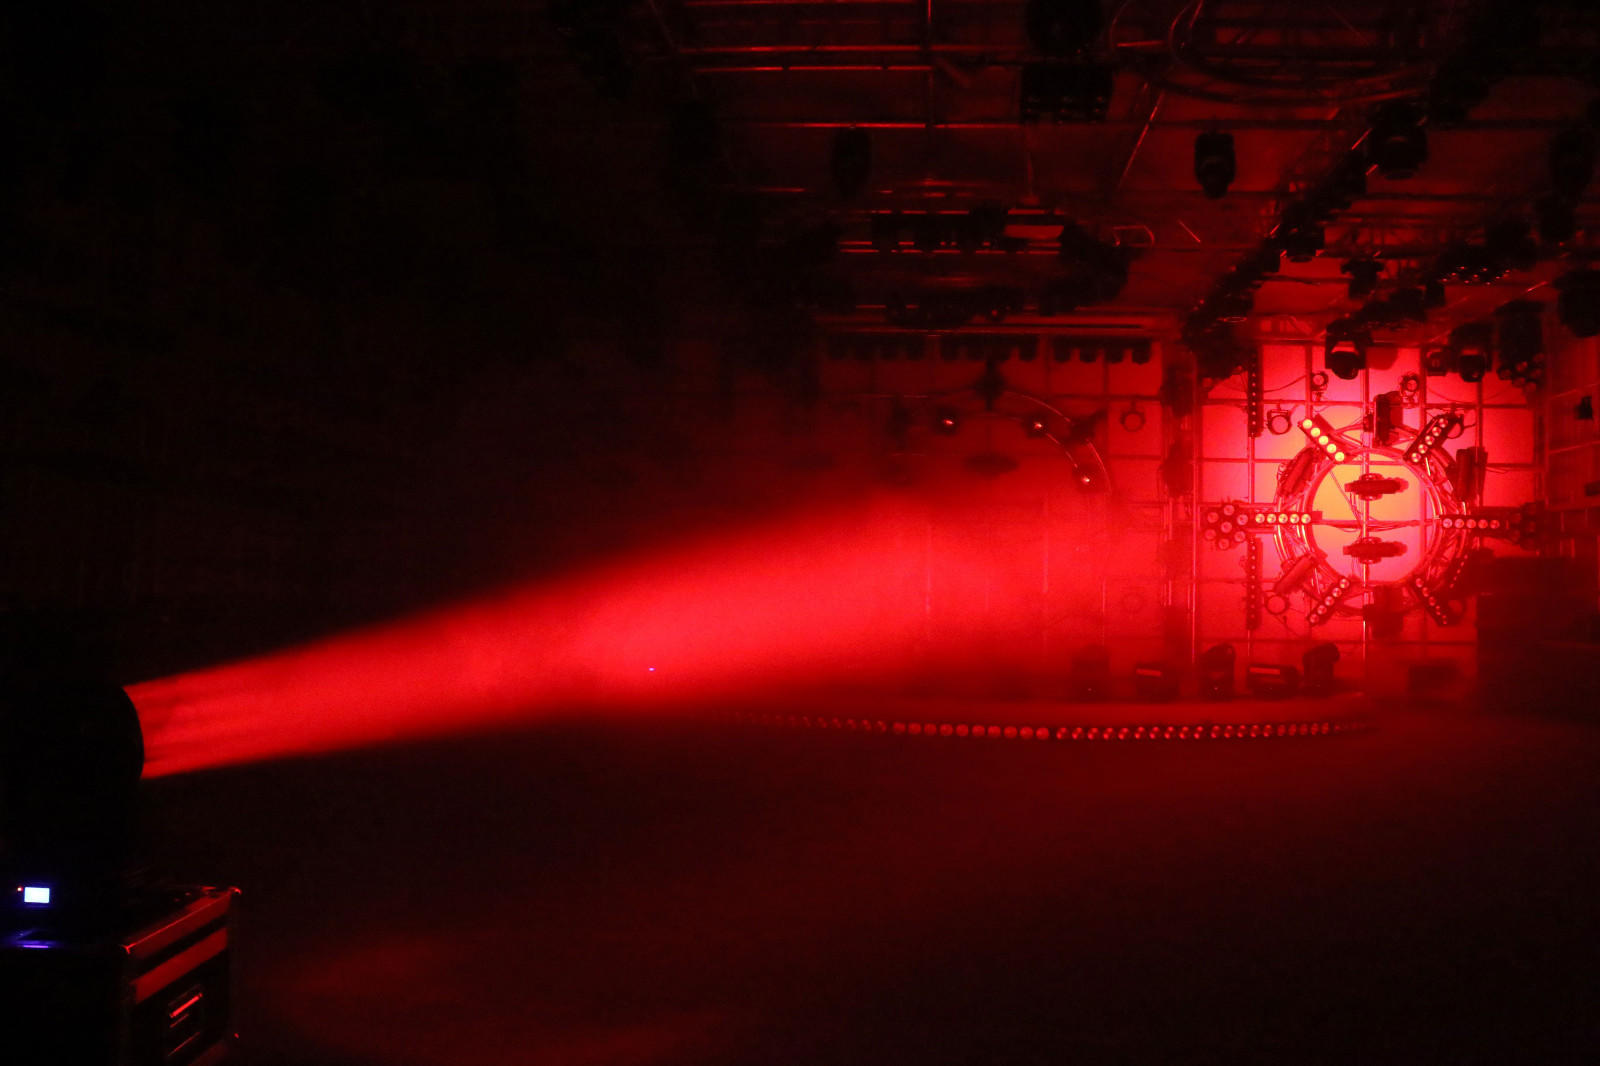 Multi-effect dj laser lights disco series for entertainment places